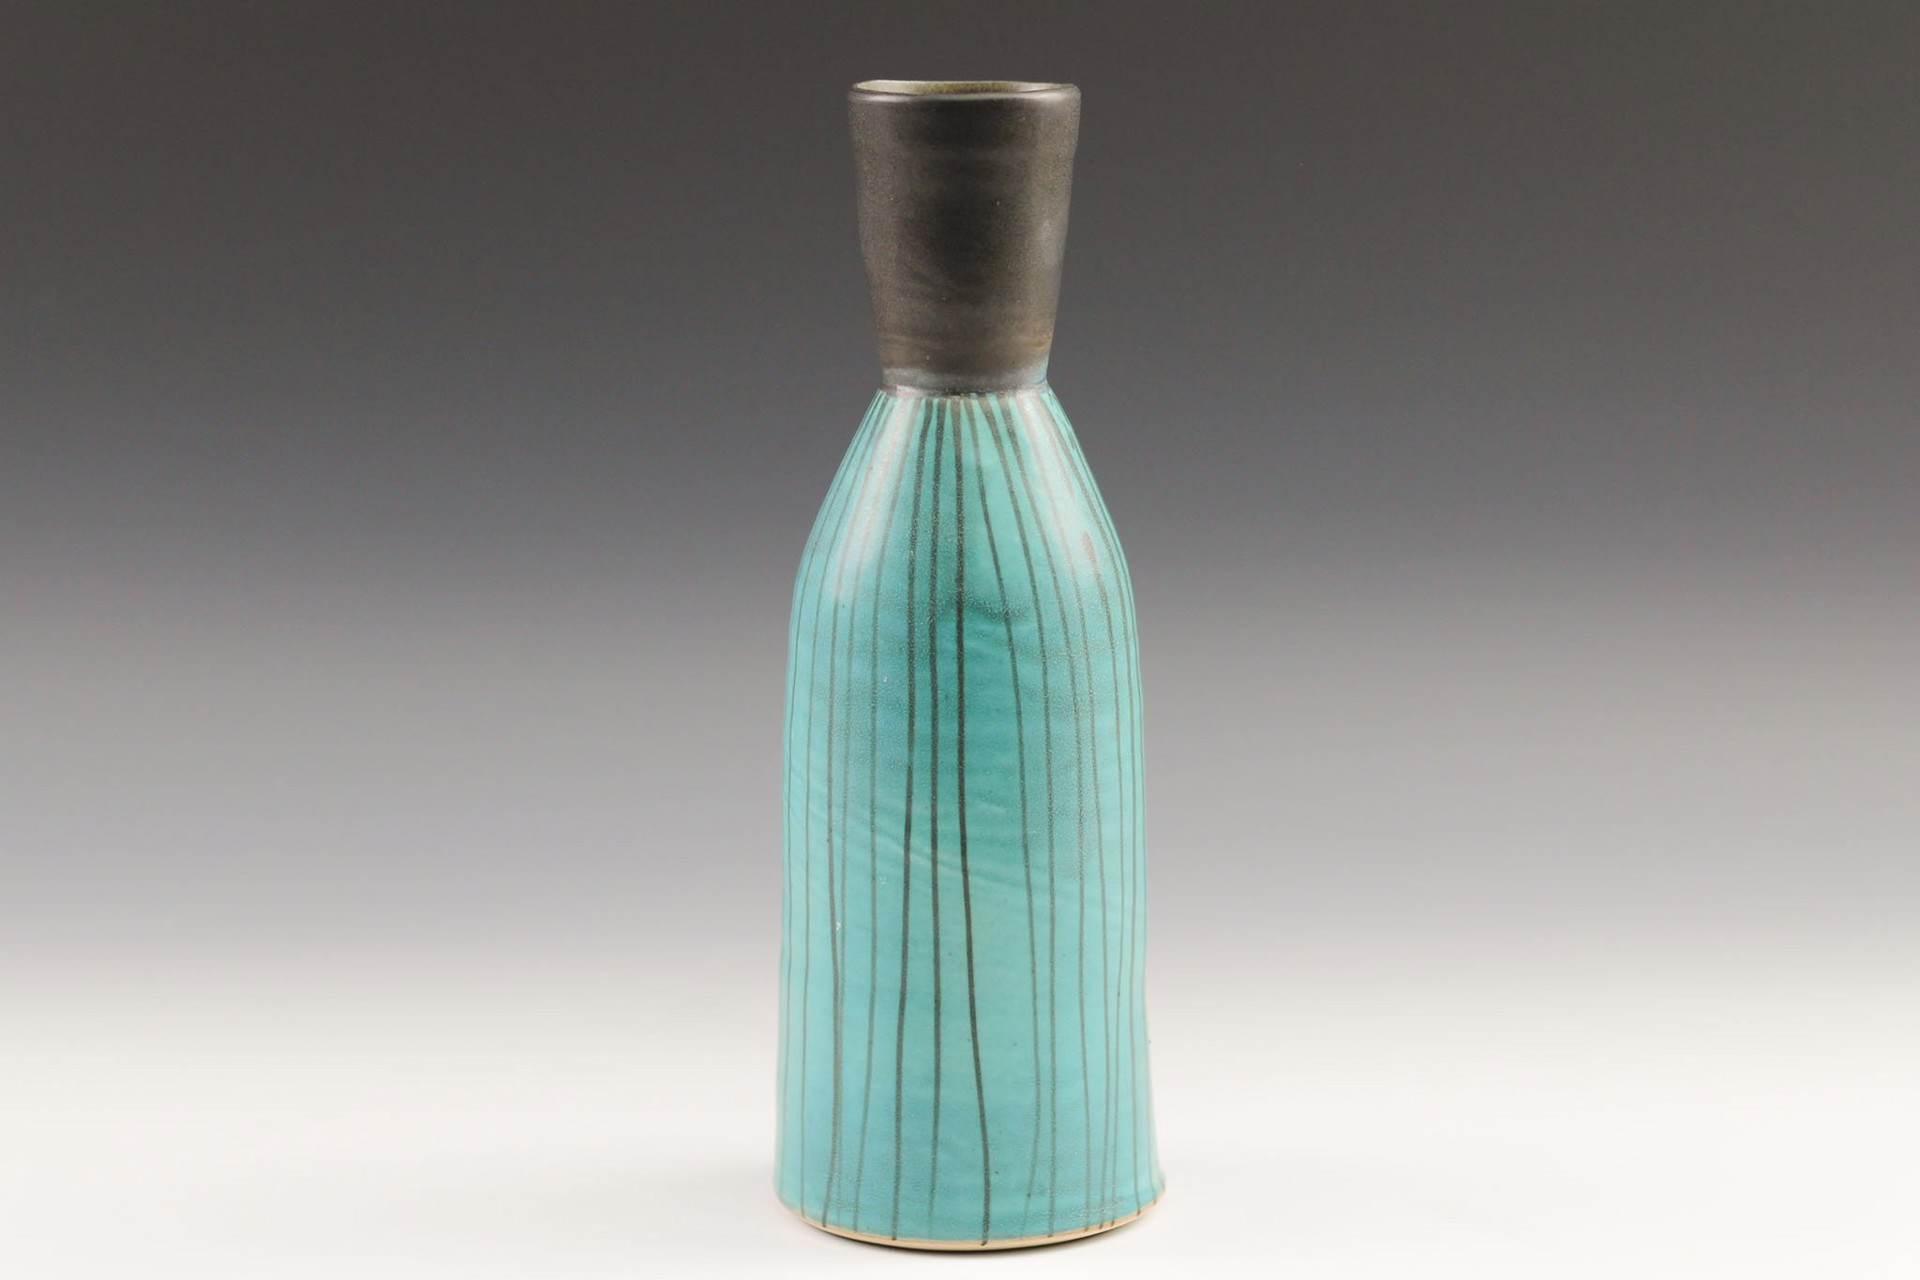 Bottle Vase by Delores Fortuna